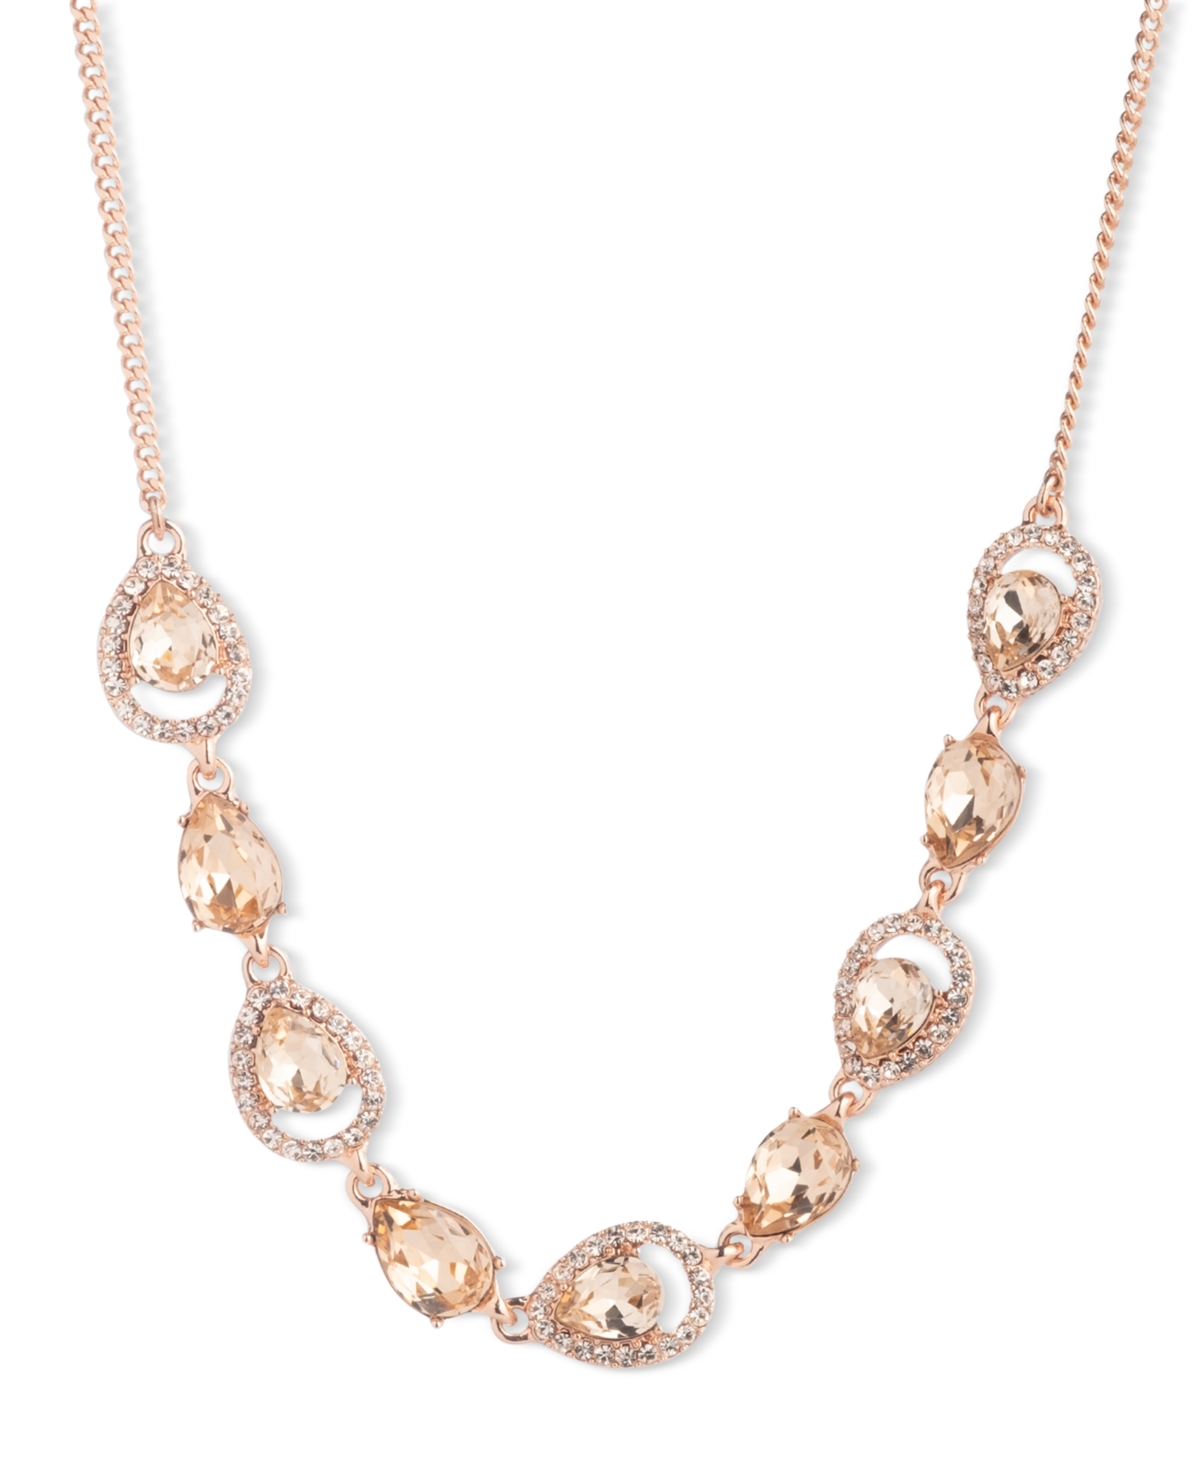 Rose Gold-Tone Pave & Pear-Shape Crystal Statement Necklace, 16" + 3" extender - Dark Pink